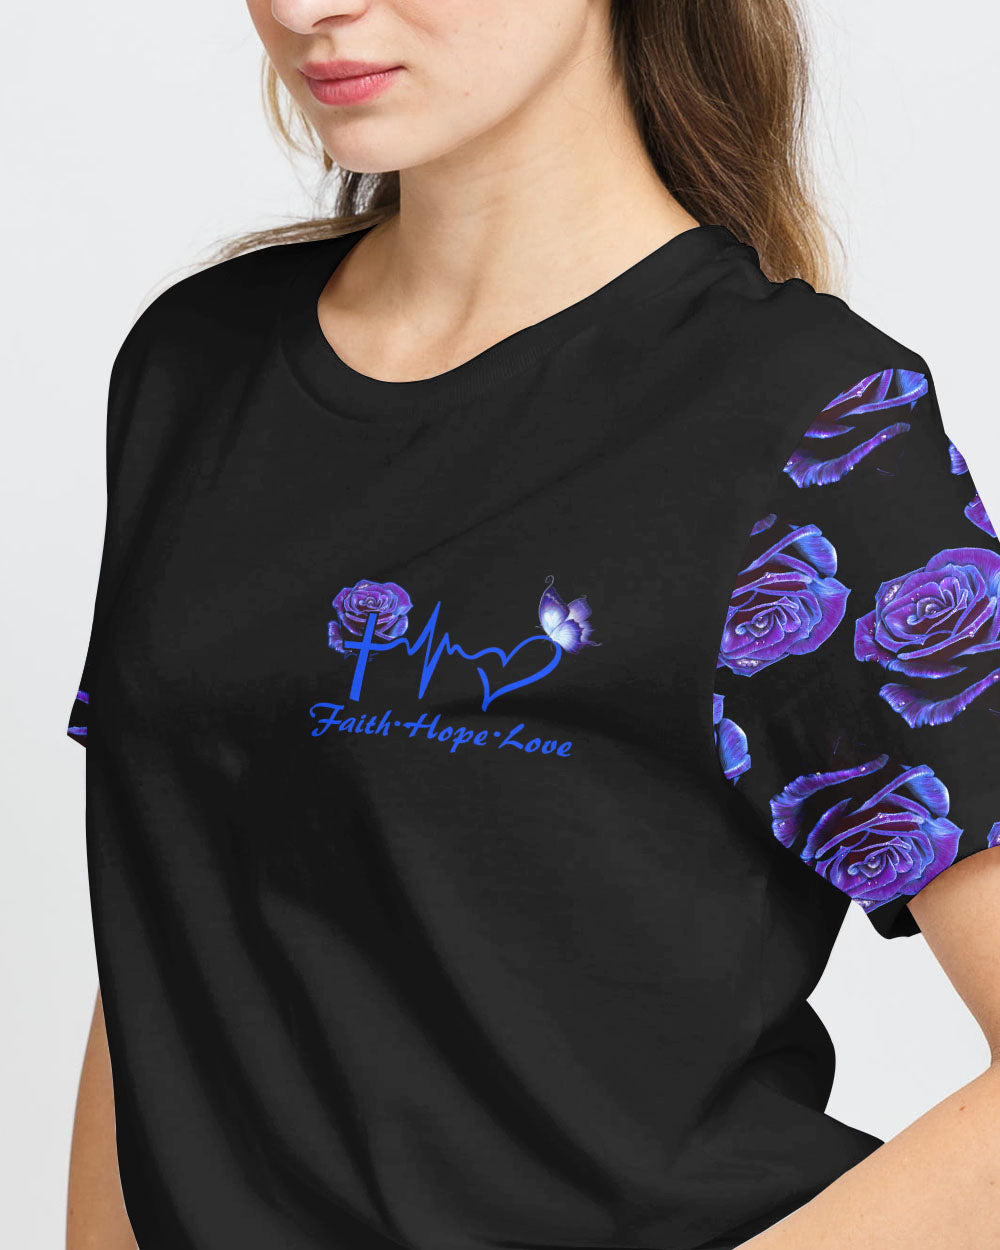 Rose Butterfly Water Women's Christian Tshirt